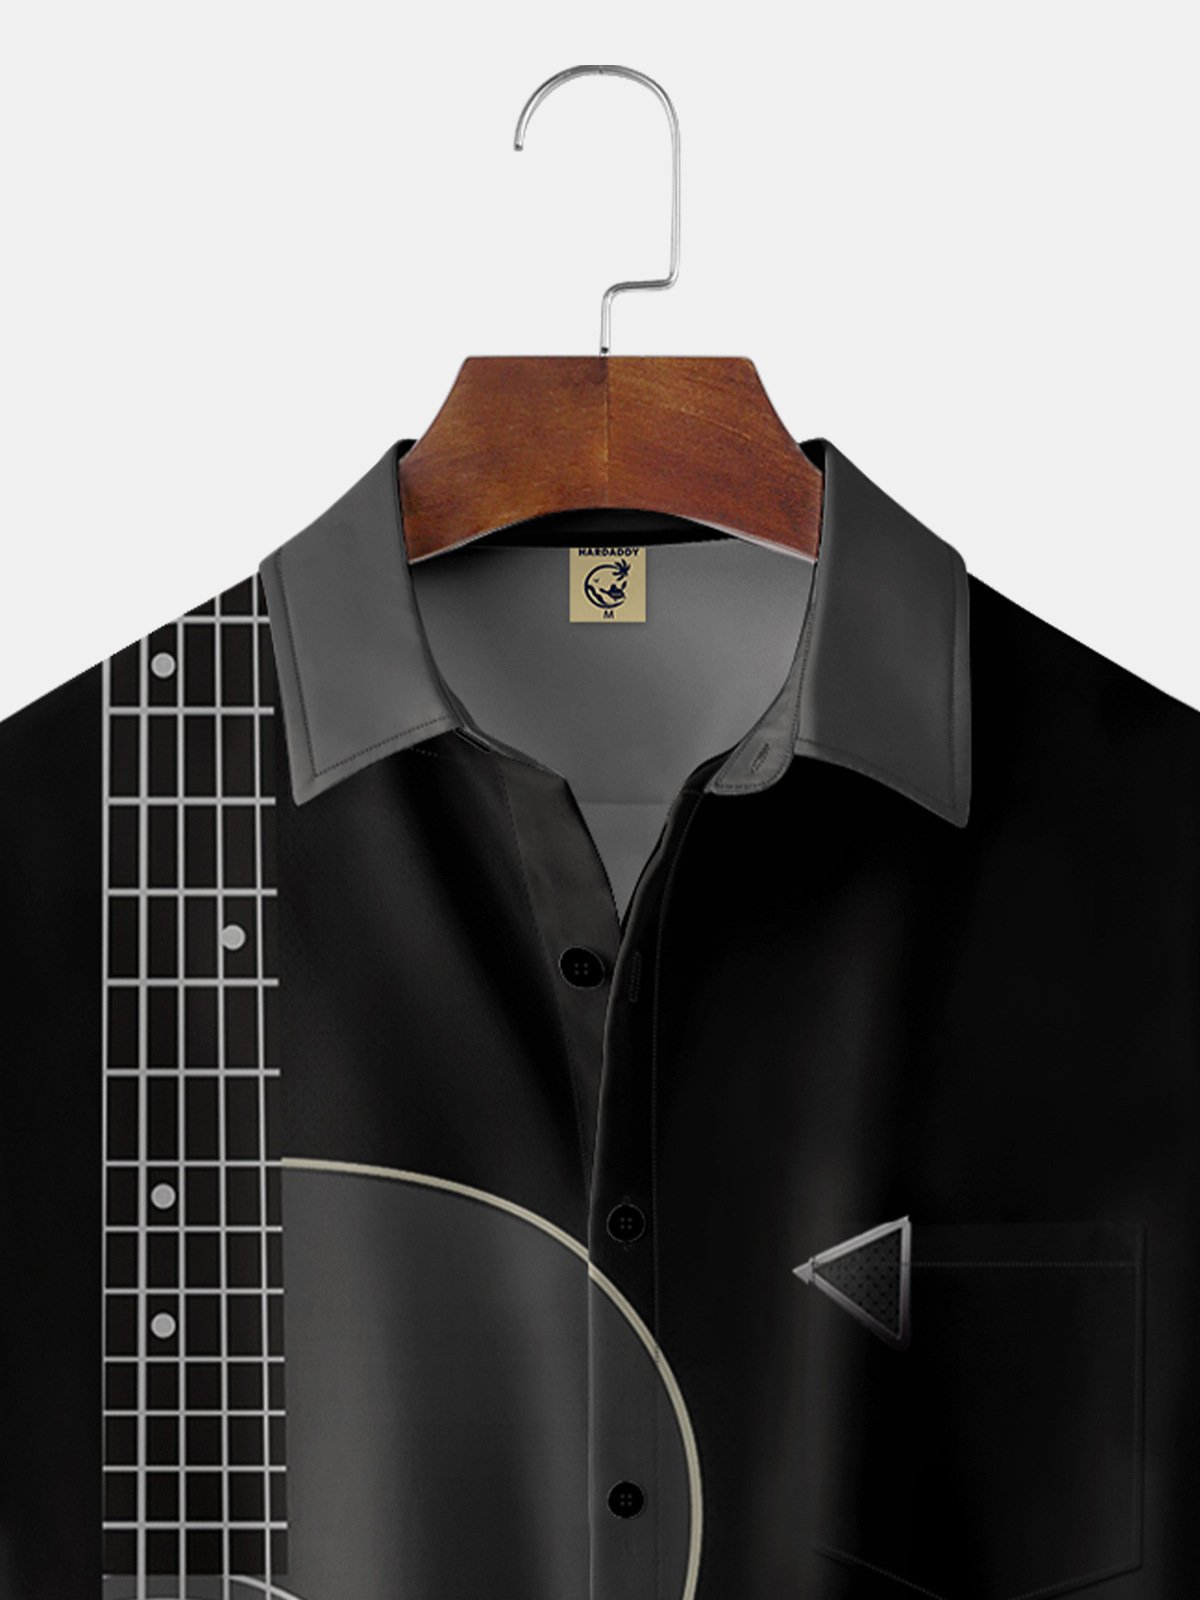 Mens Music Guitar Print Front Buttons Lapel Chest Pocket Loose Casual Hawaiian Shirt